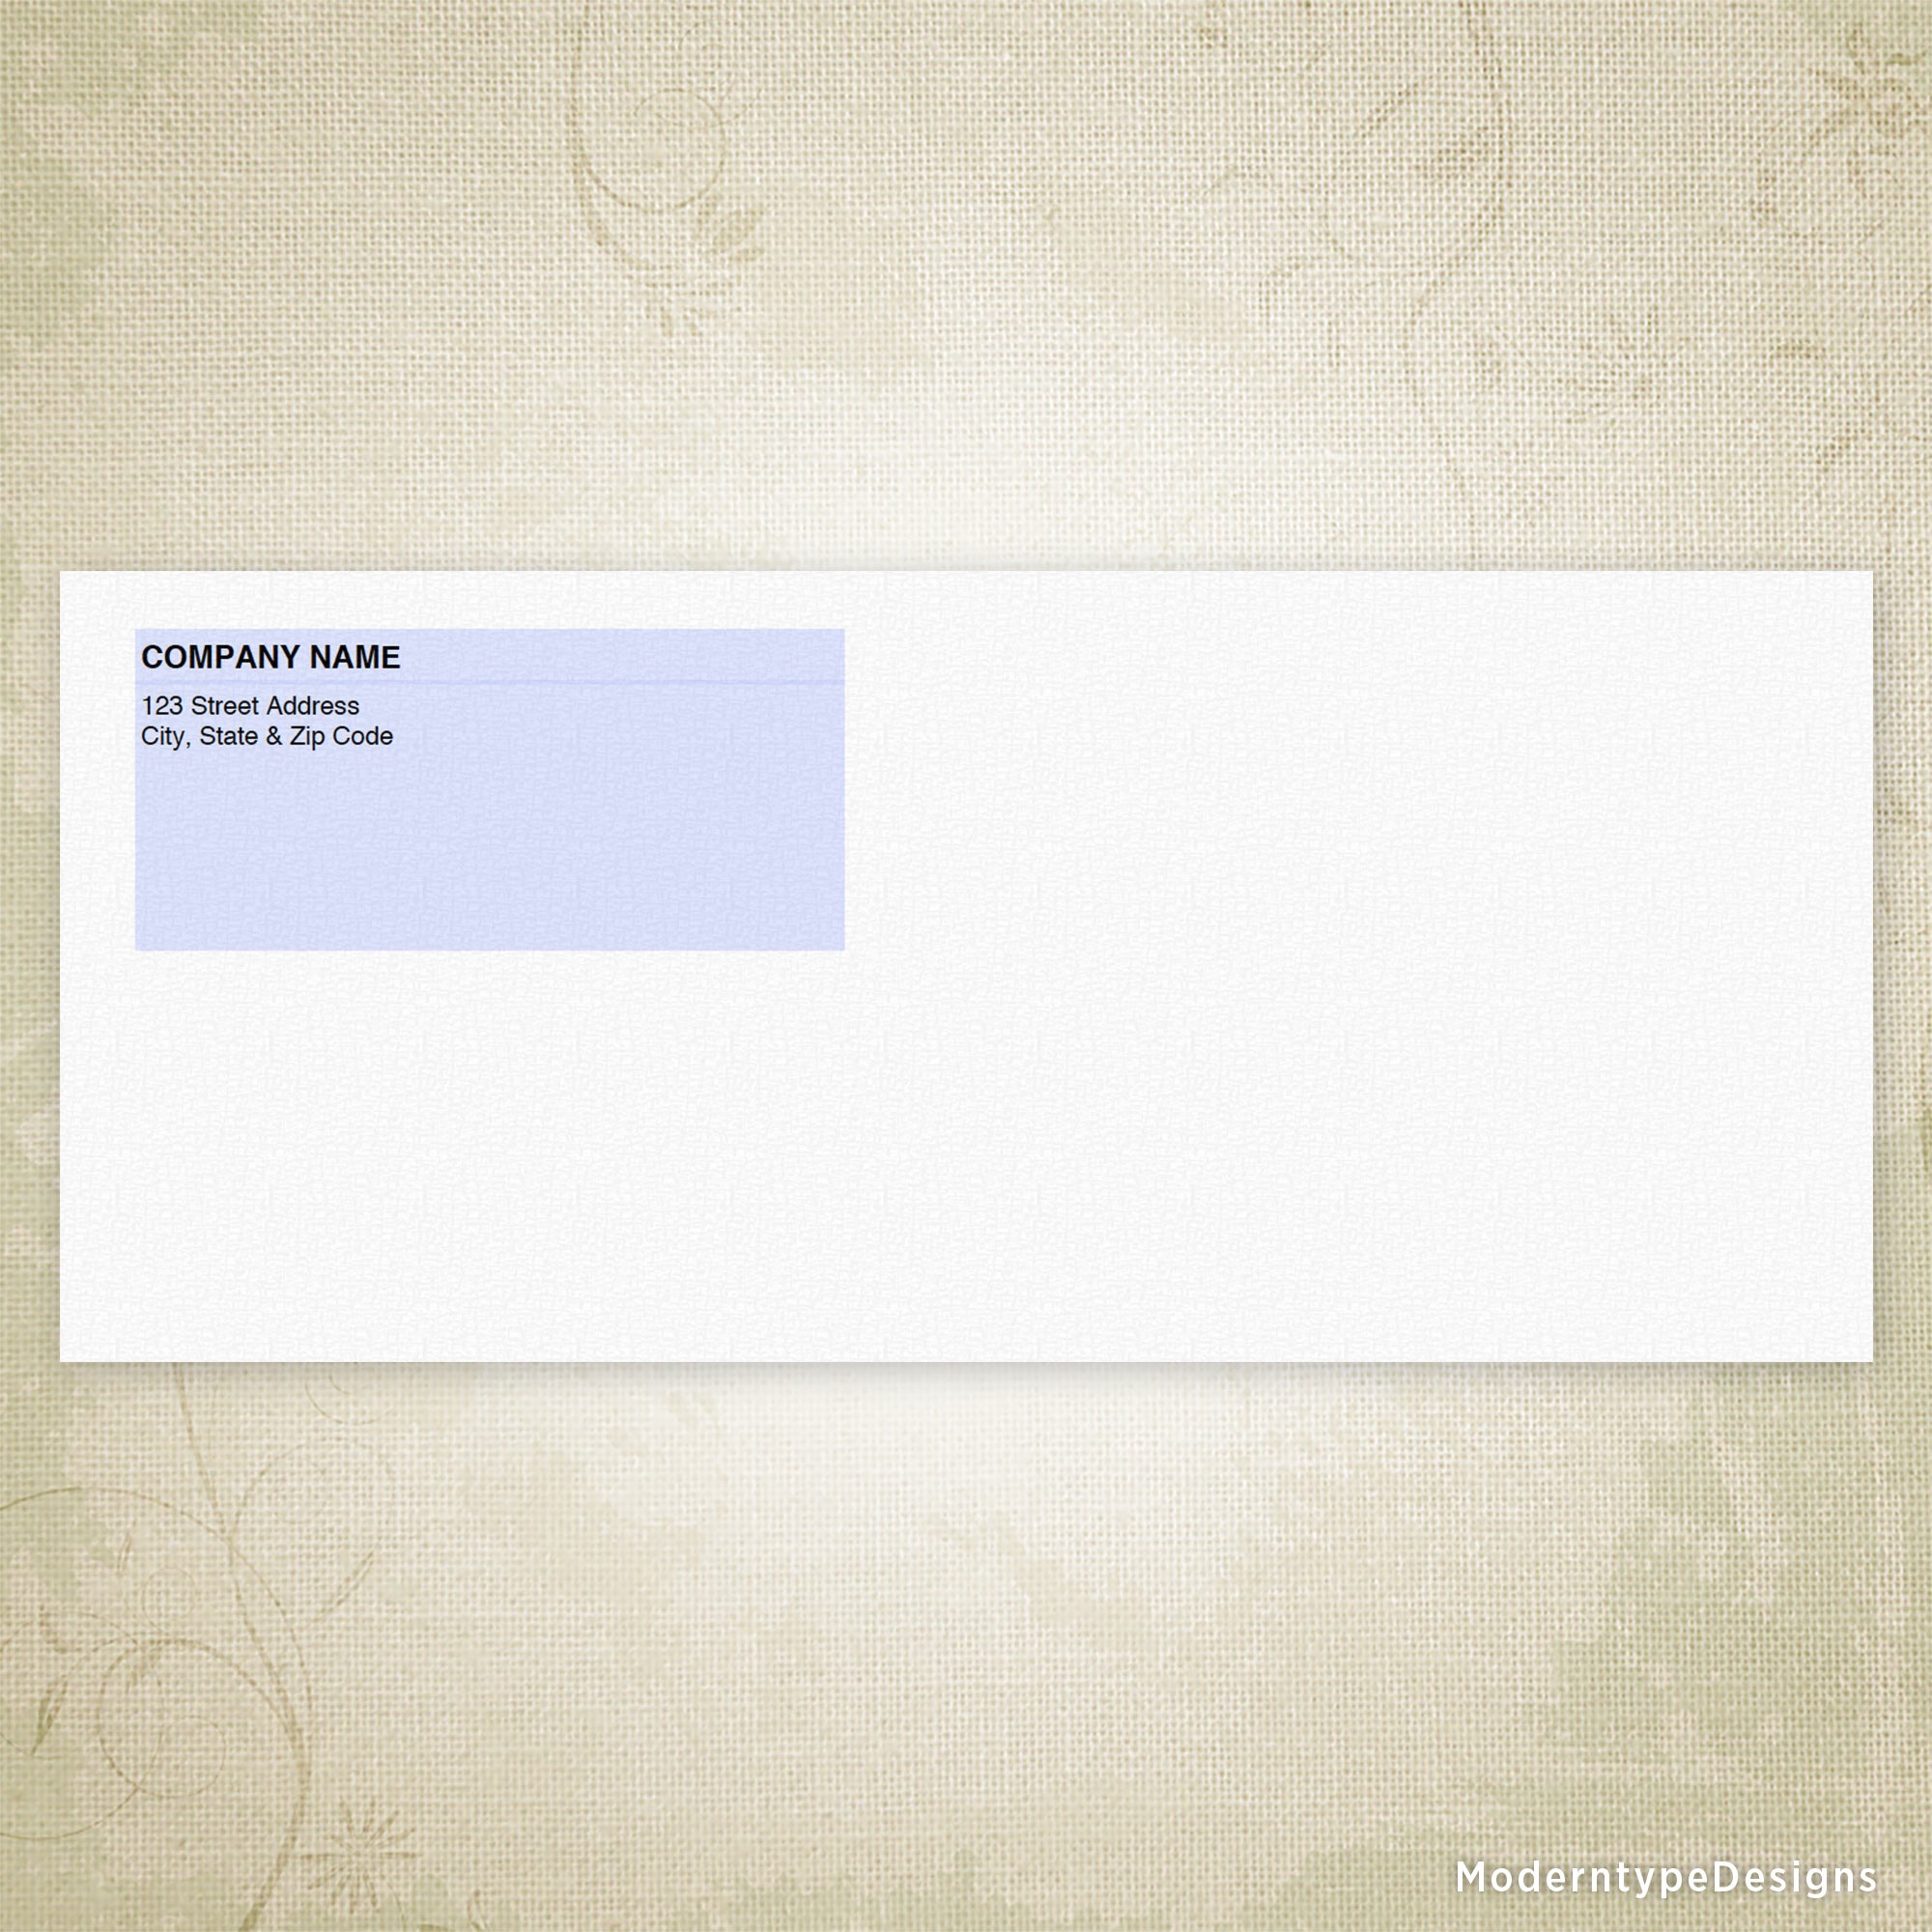 No. 9 Standard Envelope Printable, Editable